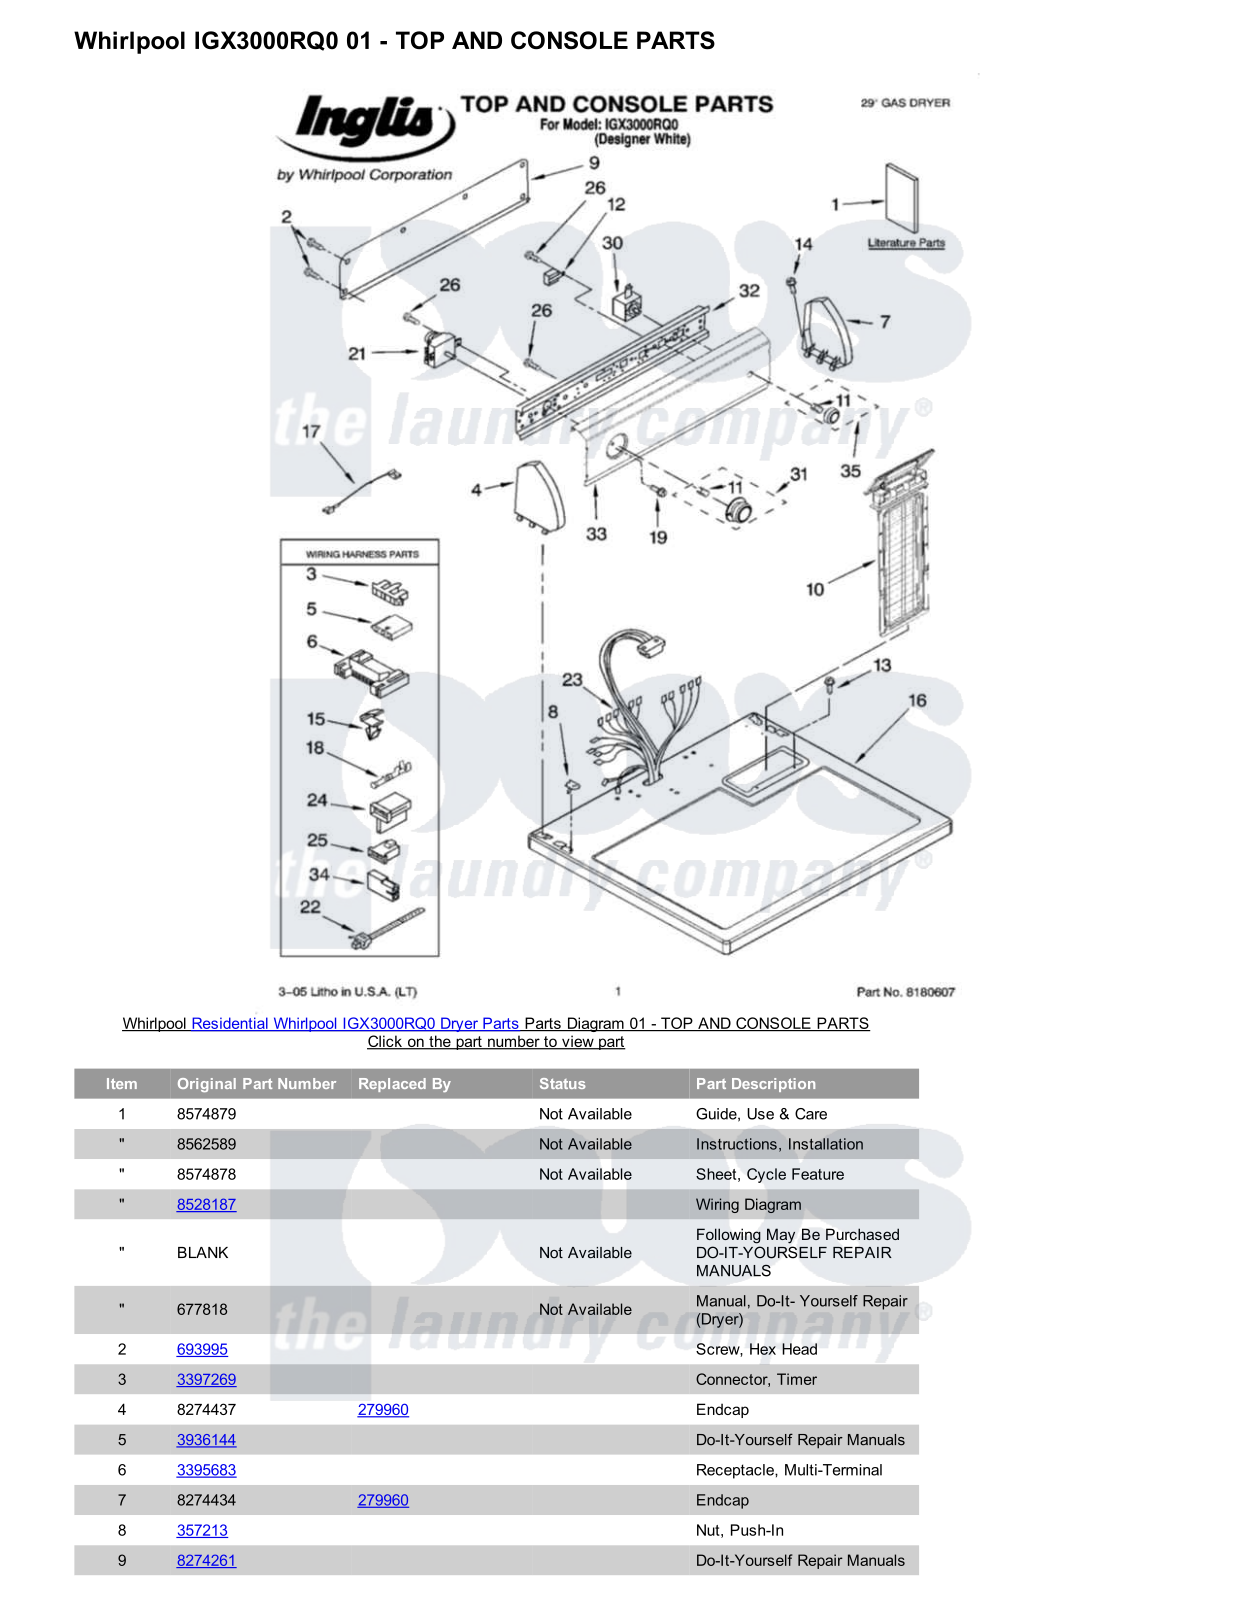 Whirlpool IGX3000RQ0 Parts Diagram